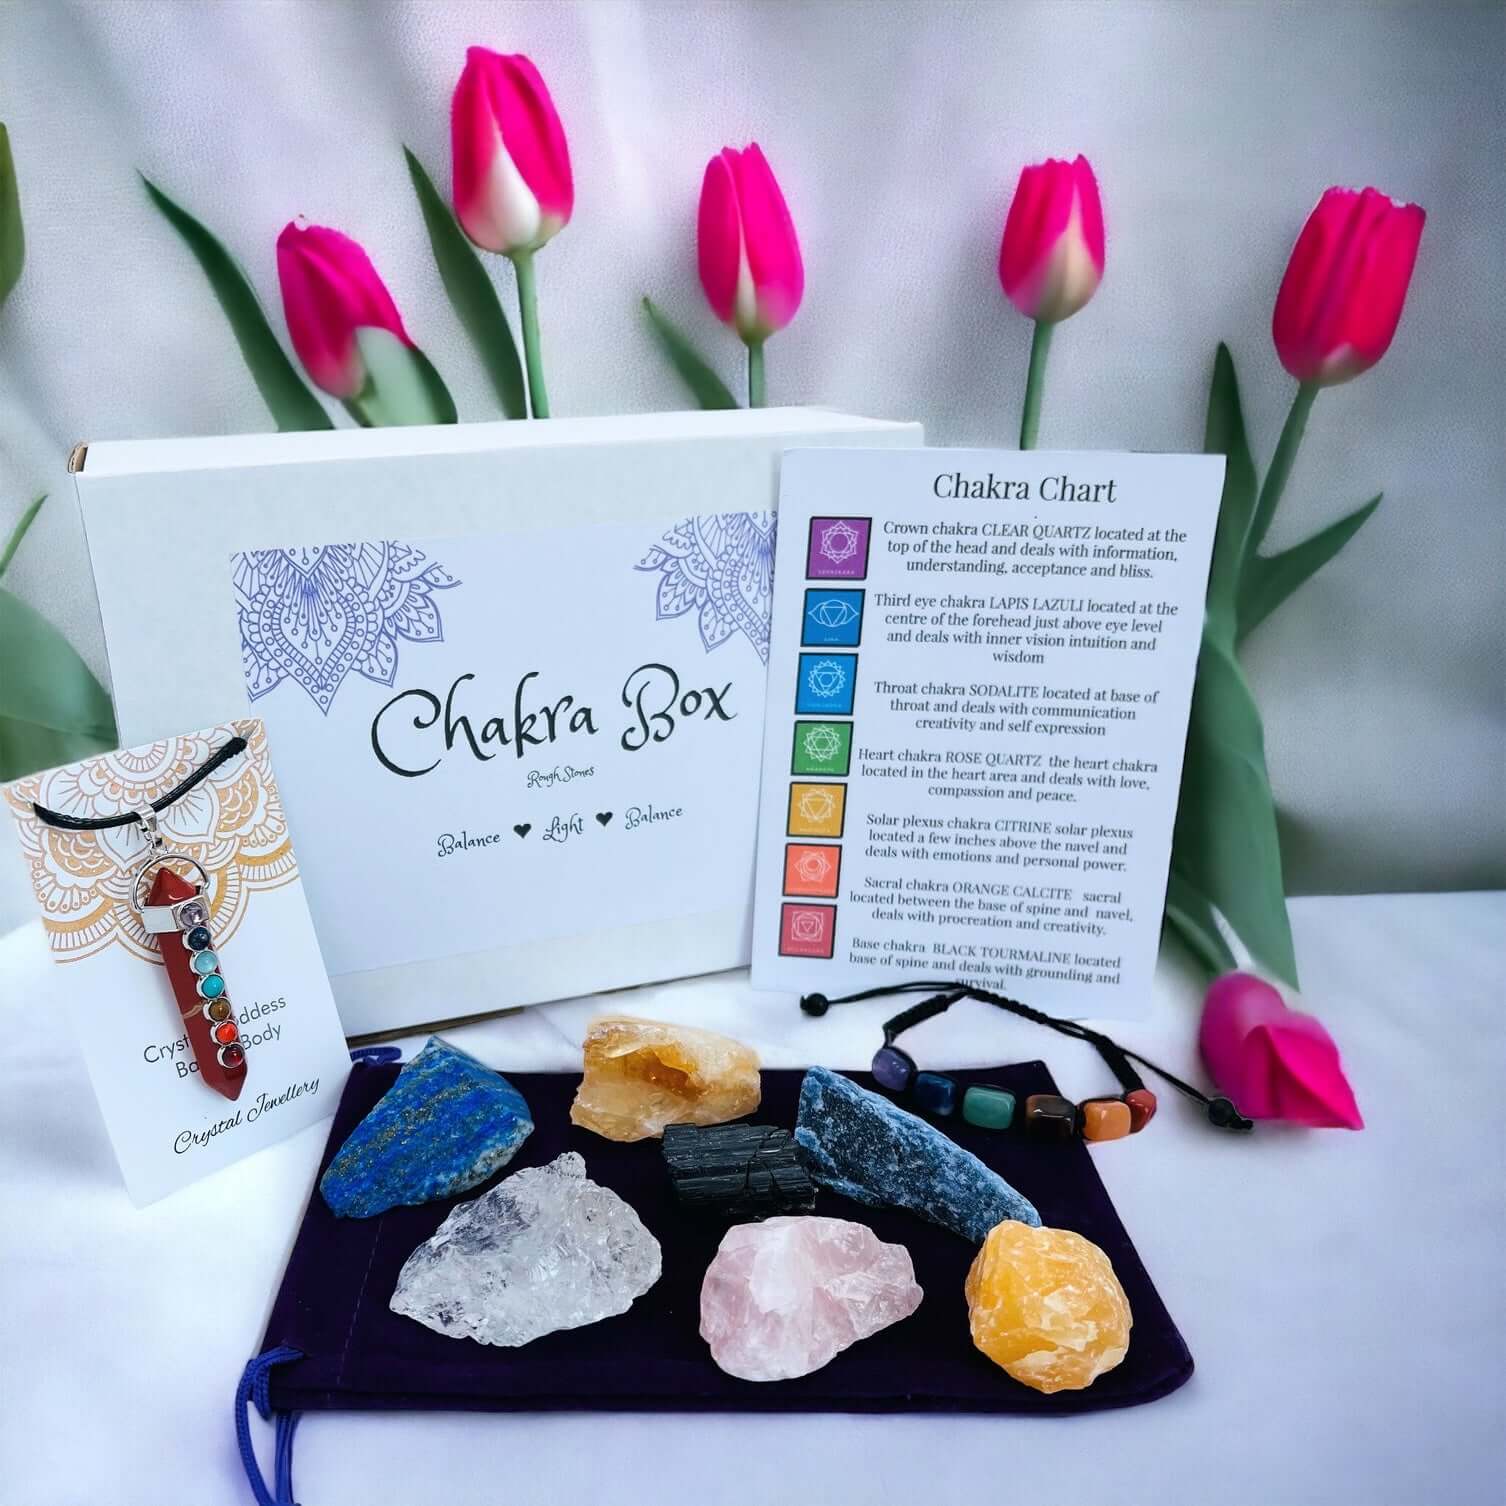 Chakra gift box containing chakra stones, chakra bracelet and chakra pendant